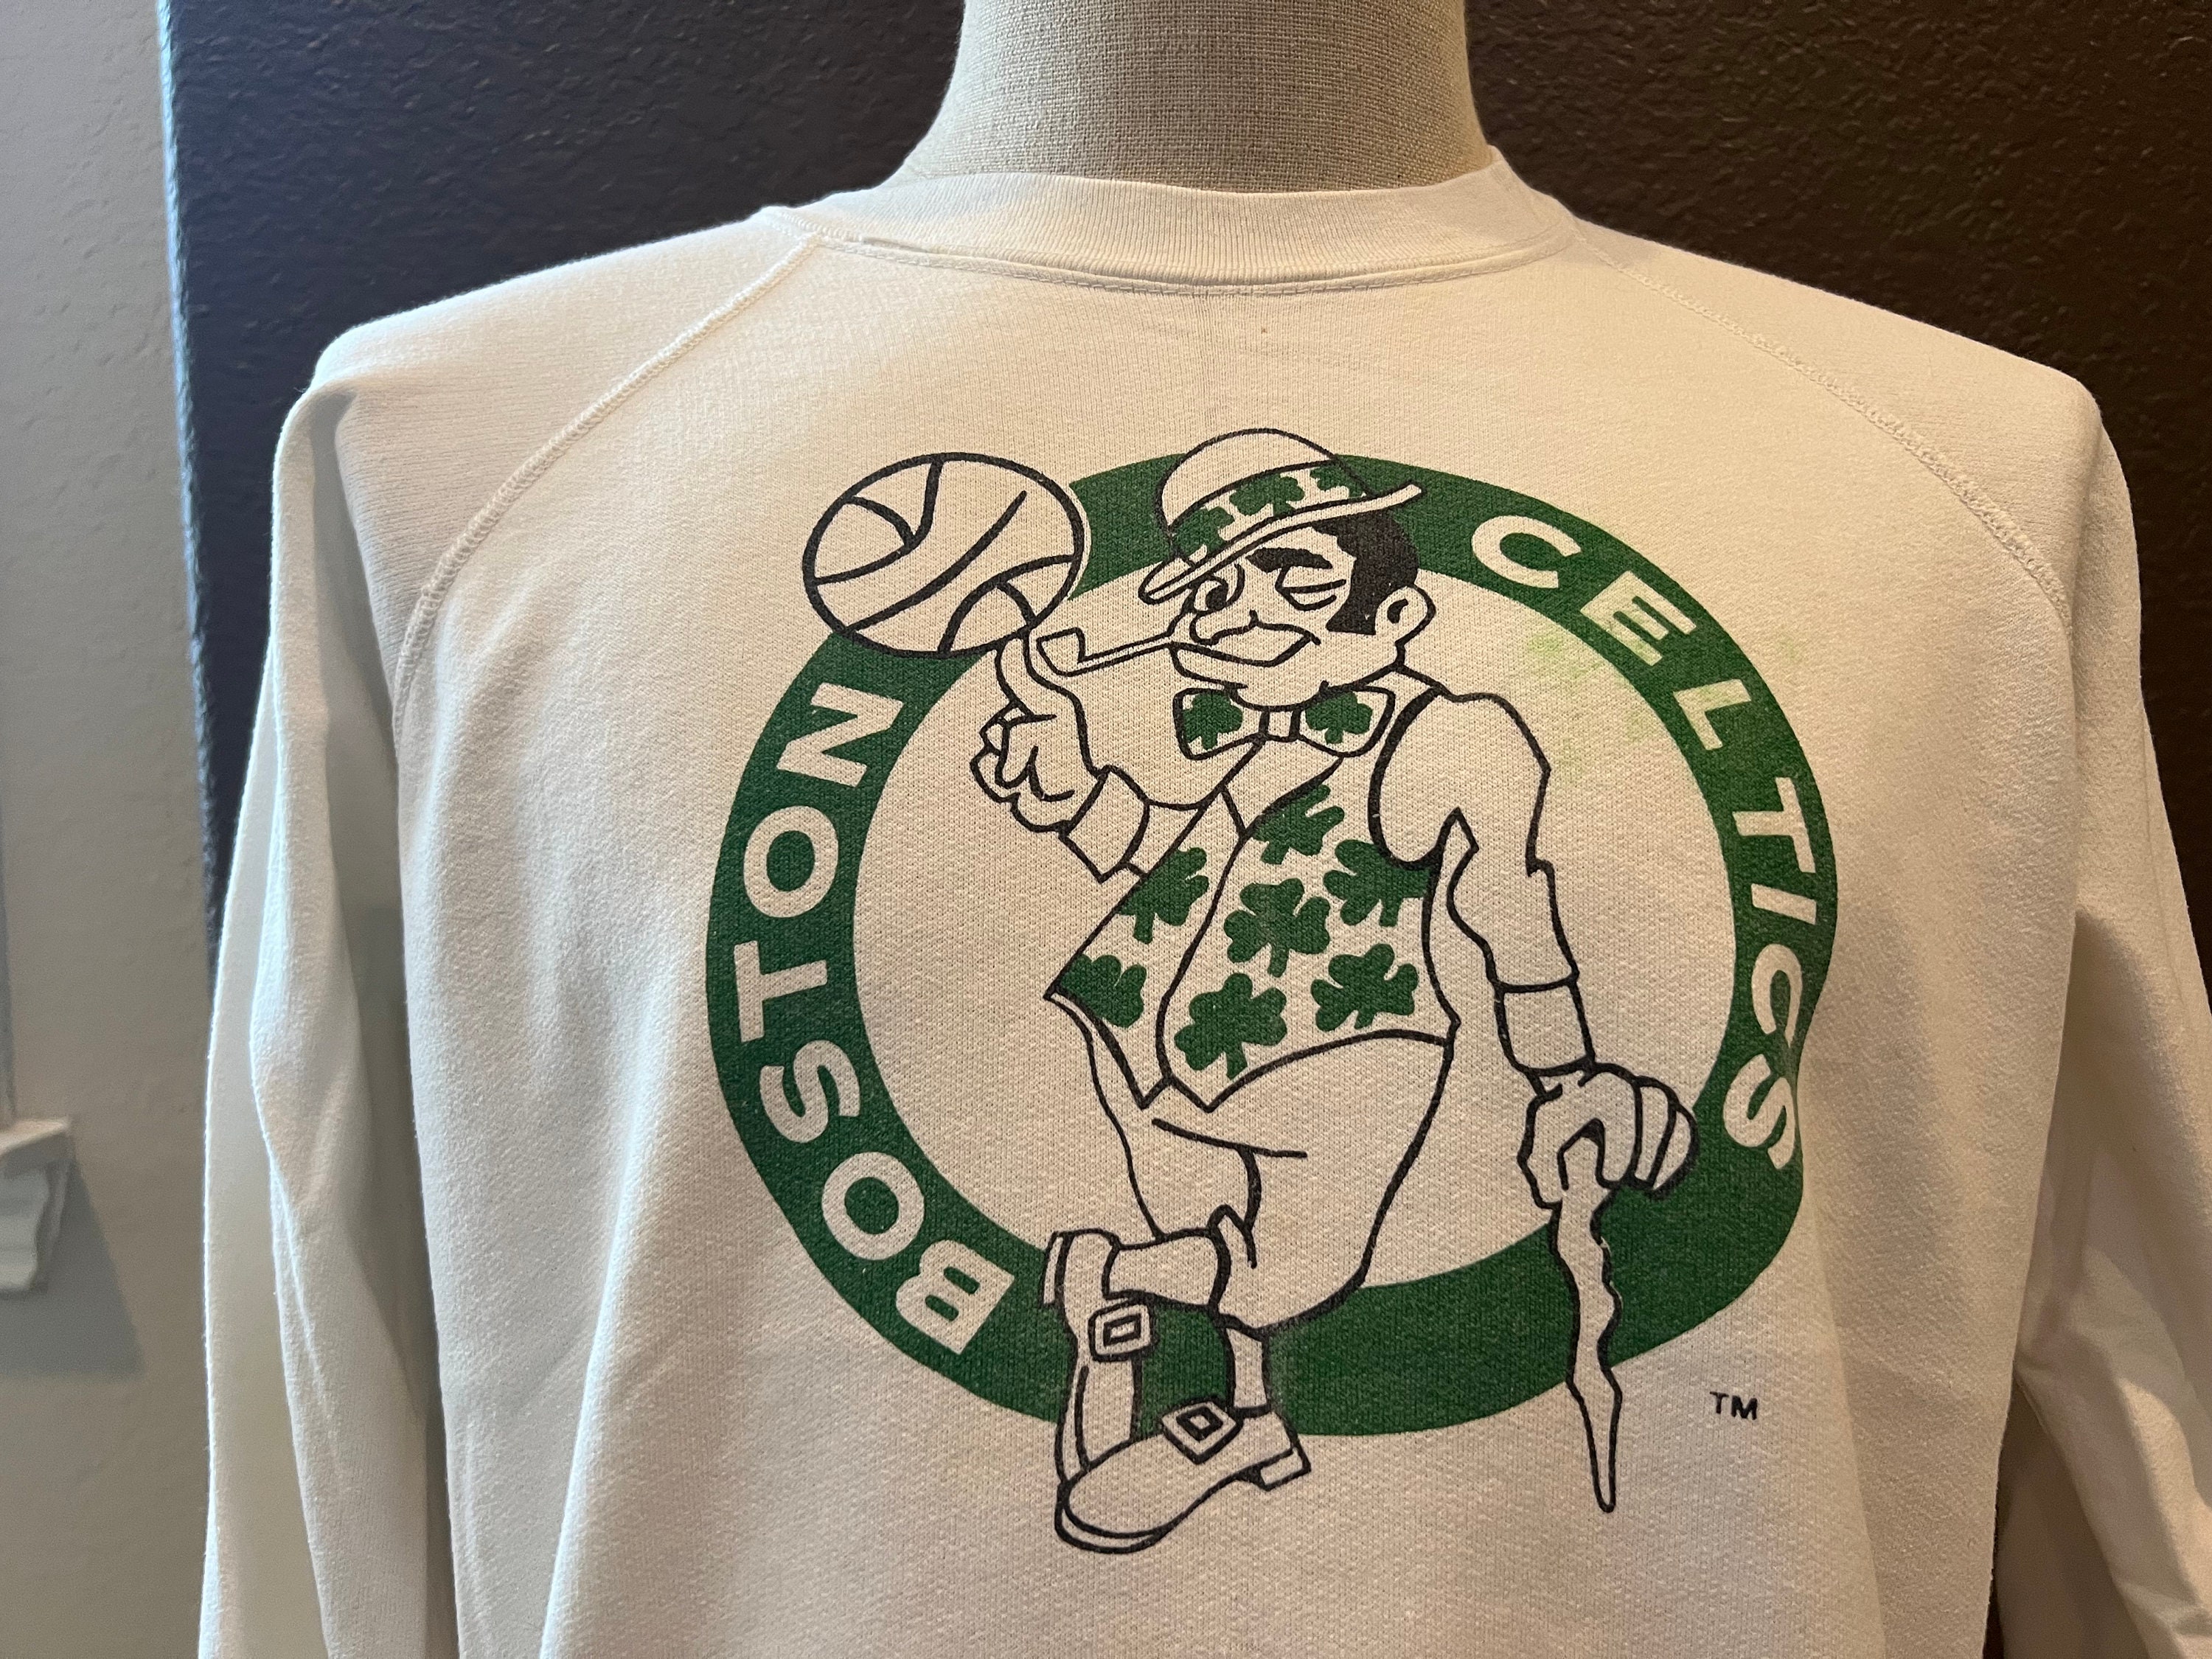 Vintage 80's Boston Celtics sweatshirt pullover by Simplemiles, $45.00